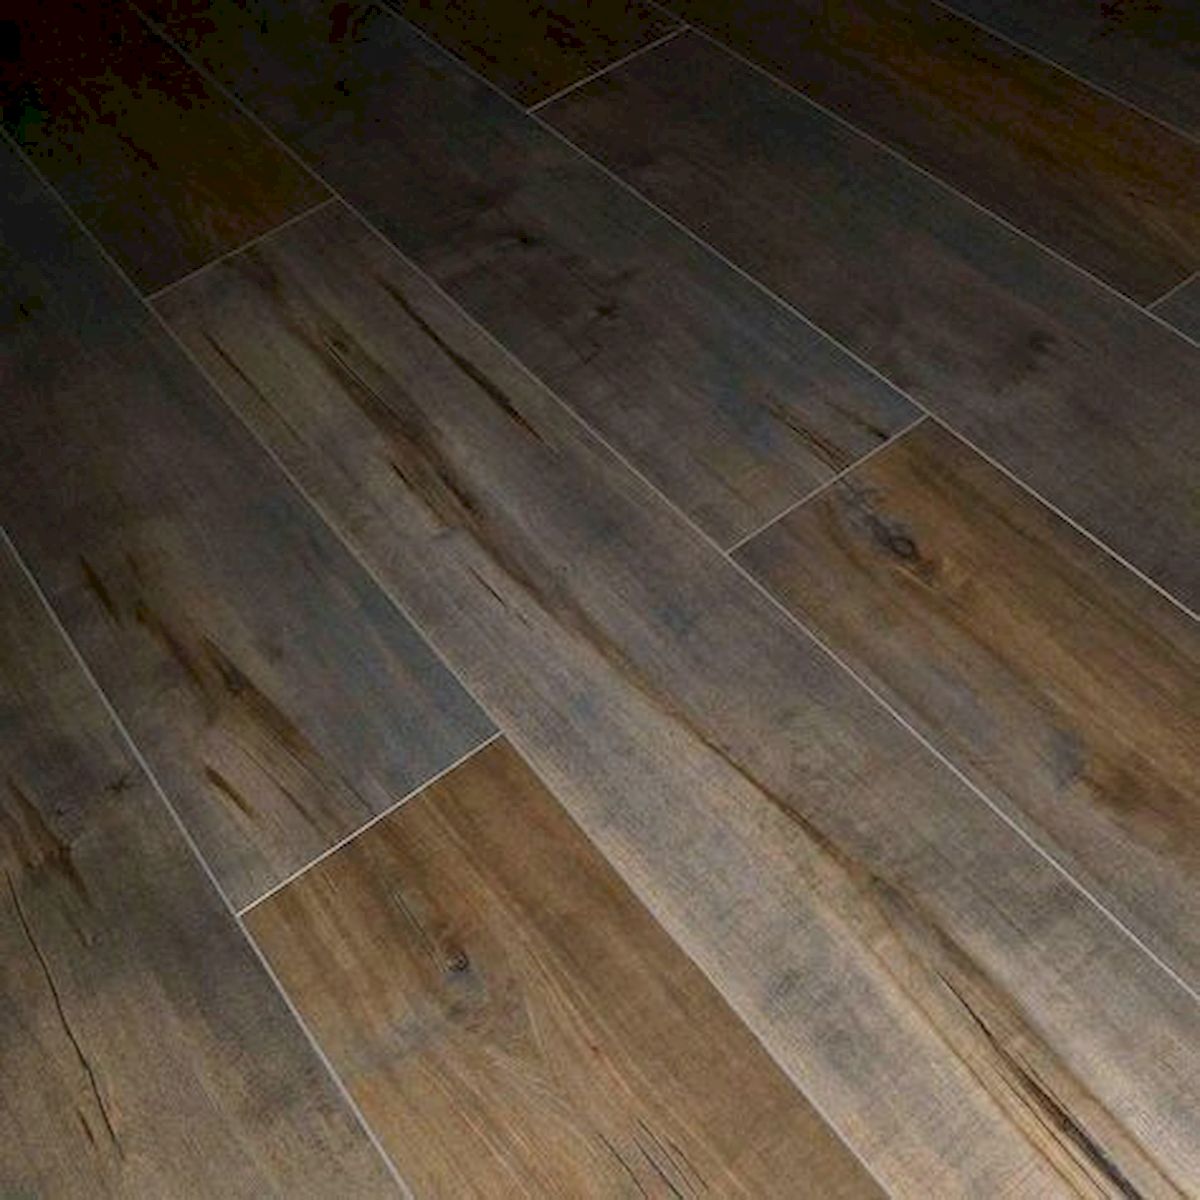 80 Gorgeous Hardwood Floor Ideas For Interior Home (65)